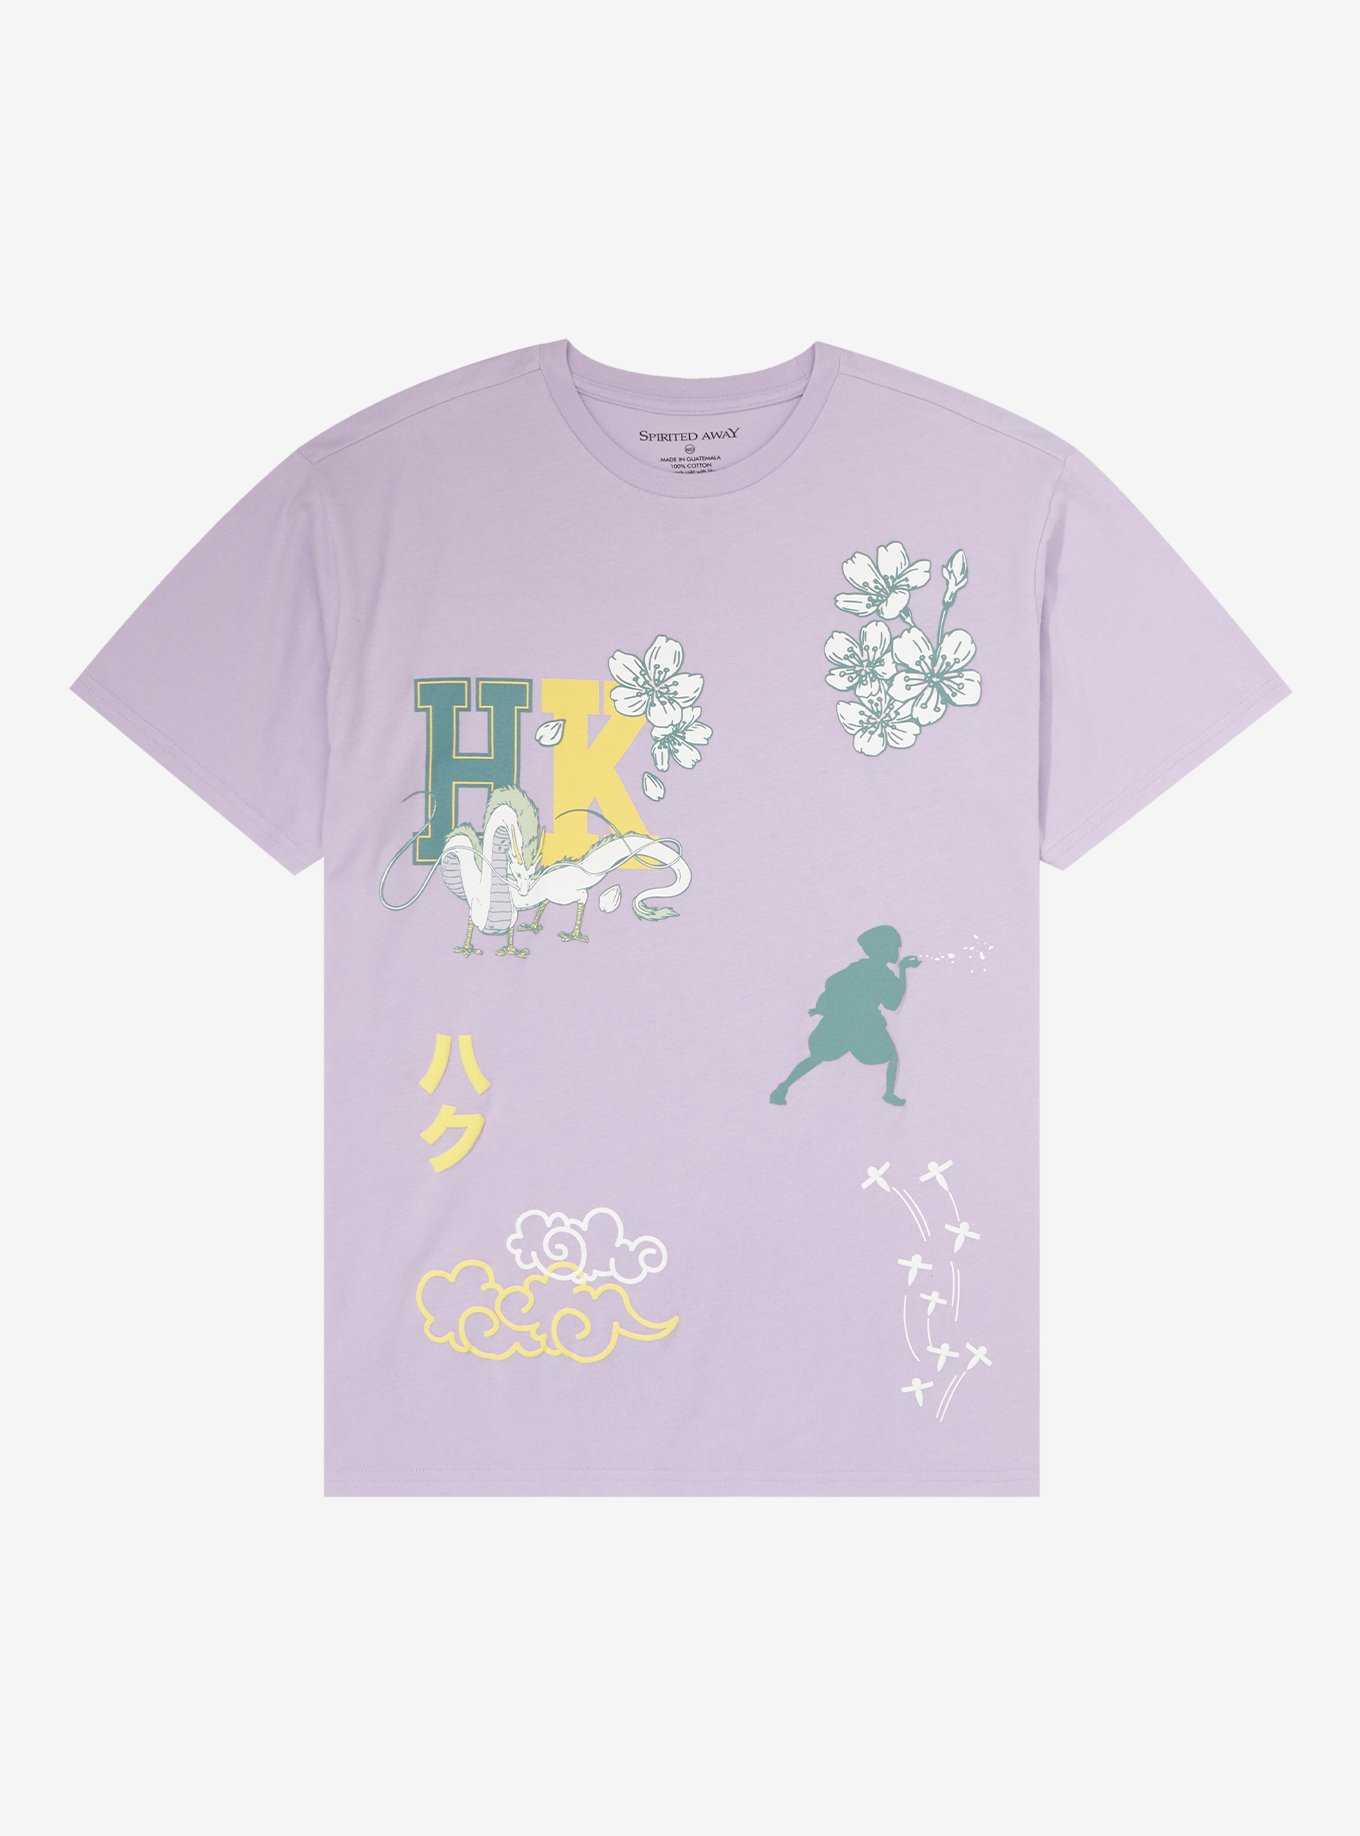 Studio Ghibli Spirited Away Haku Icons T-Shirt, , hi-res